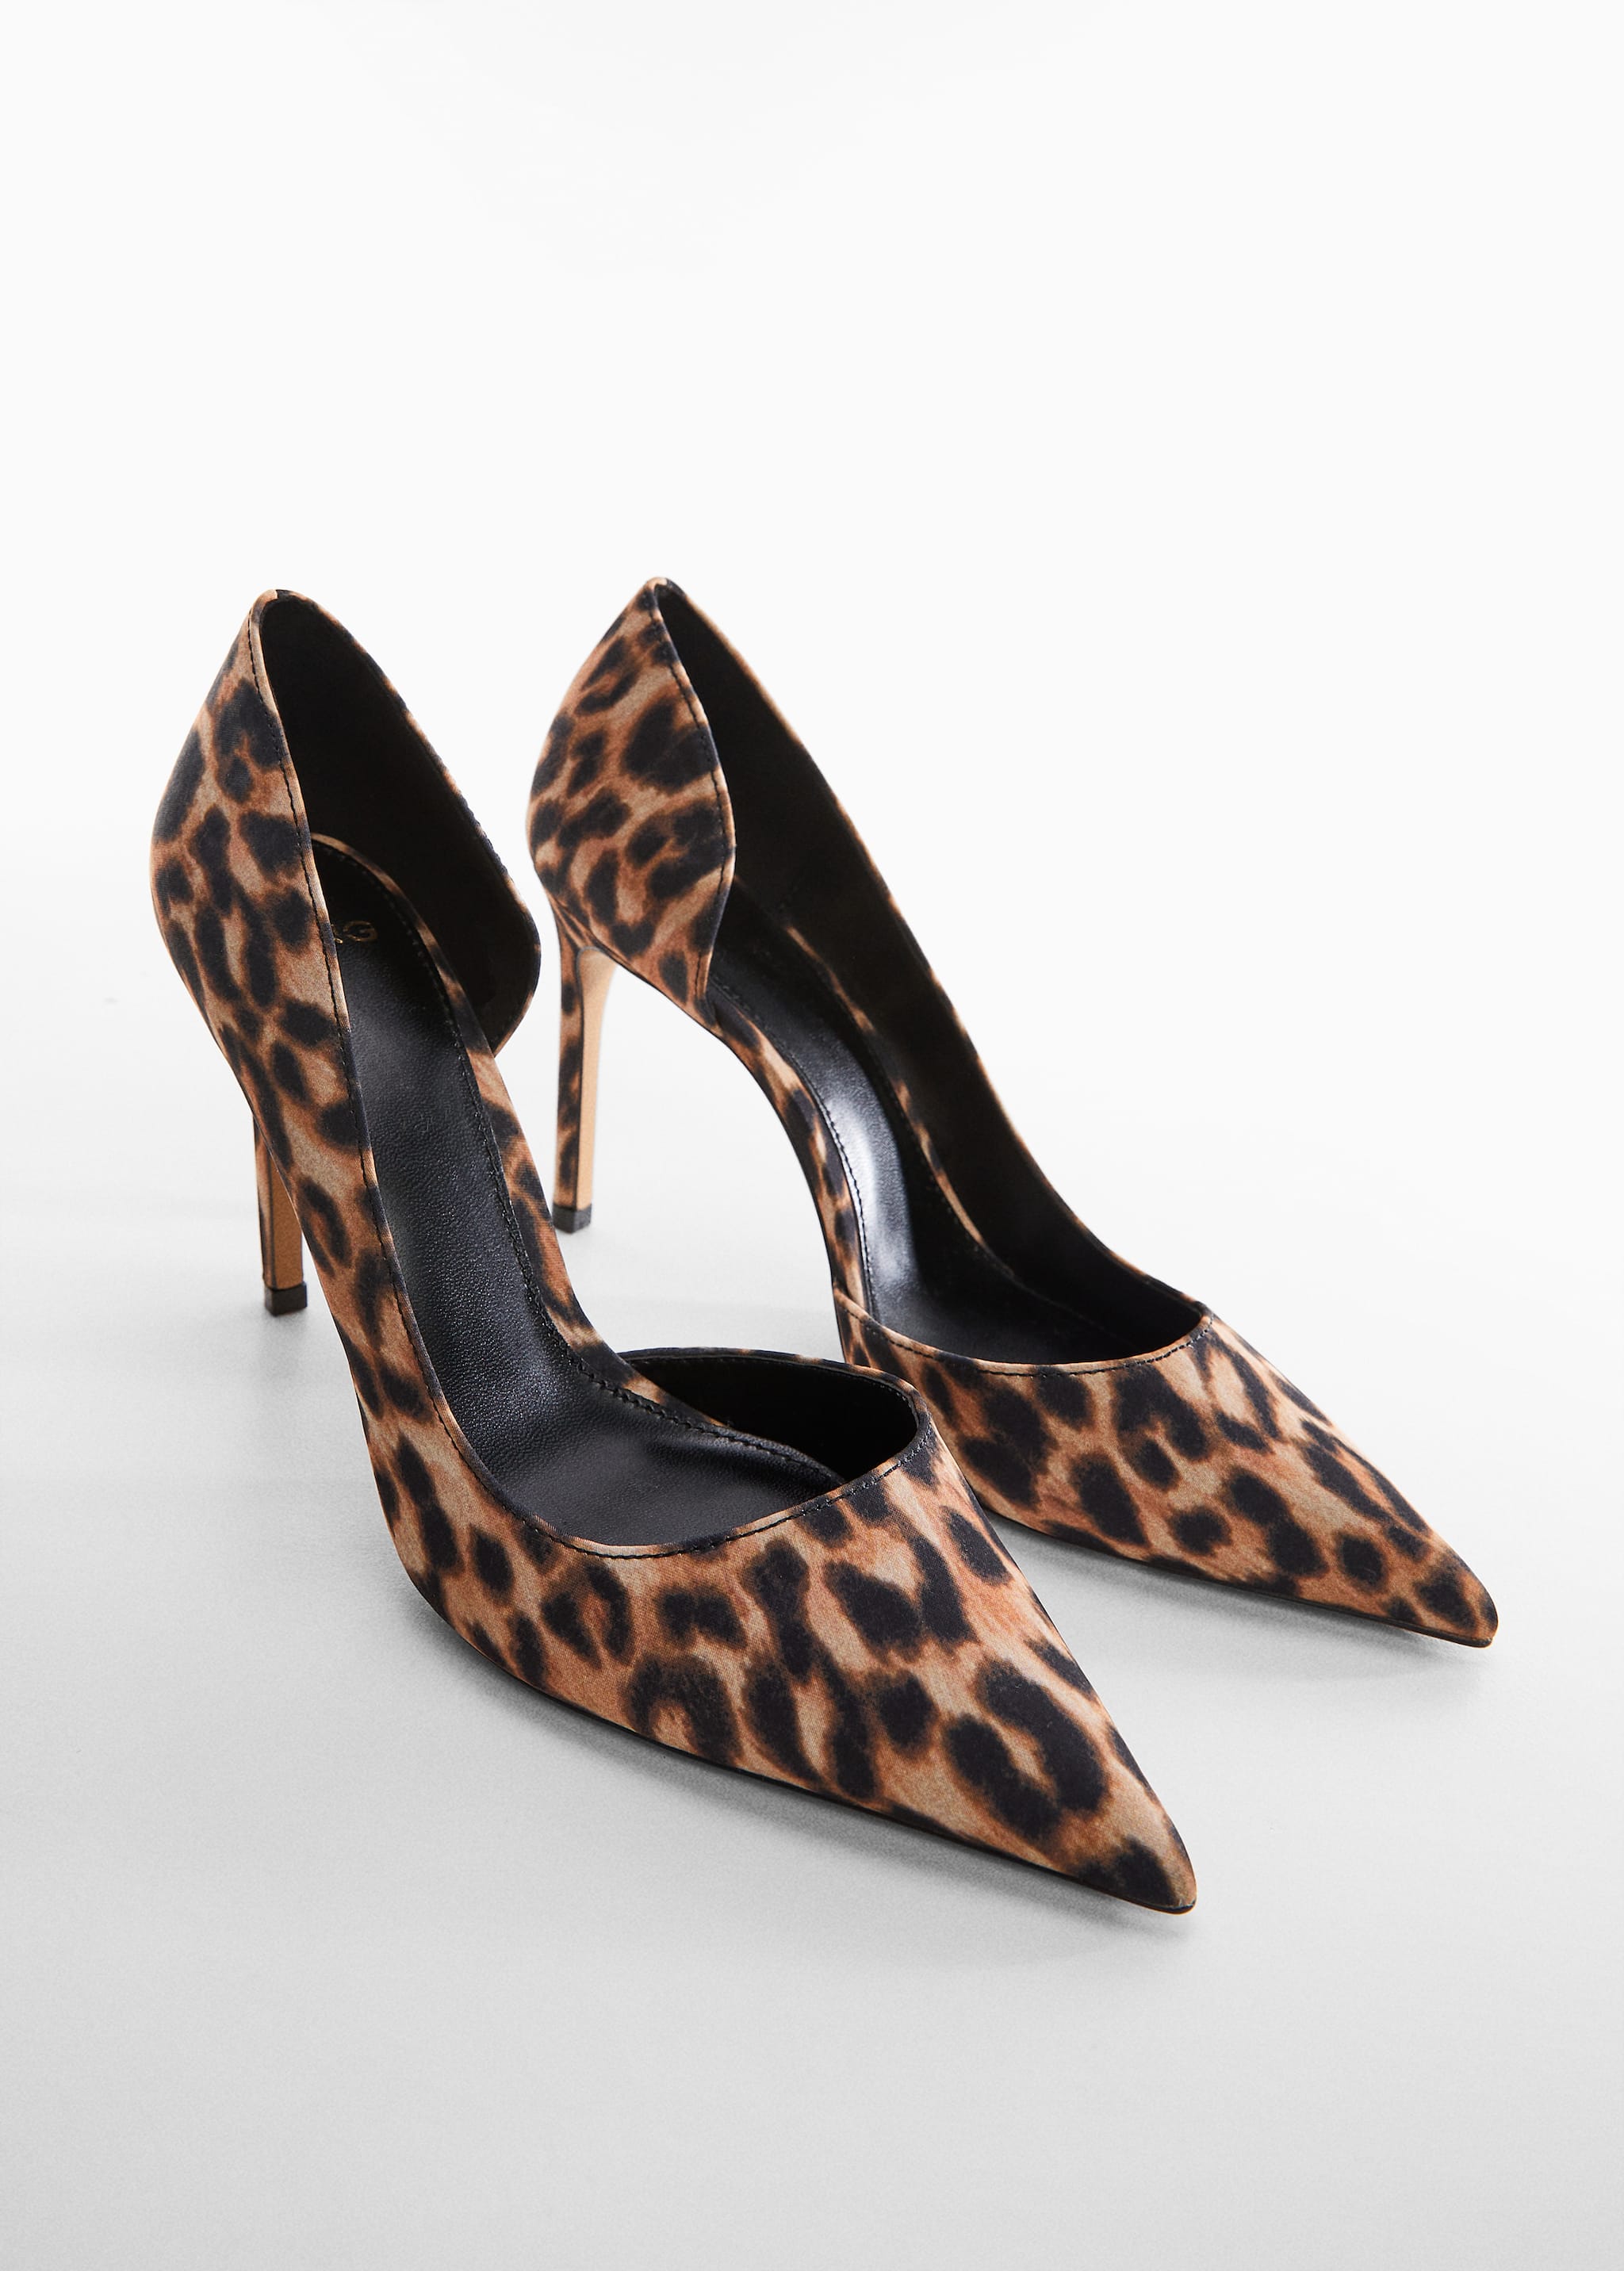 Animal-print high heeled shoes - Medium plane